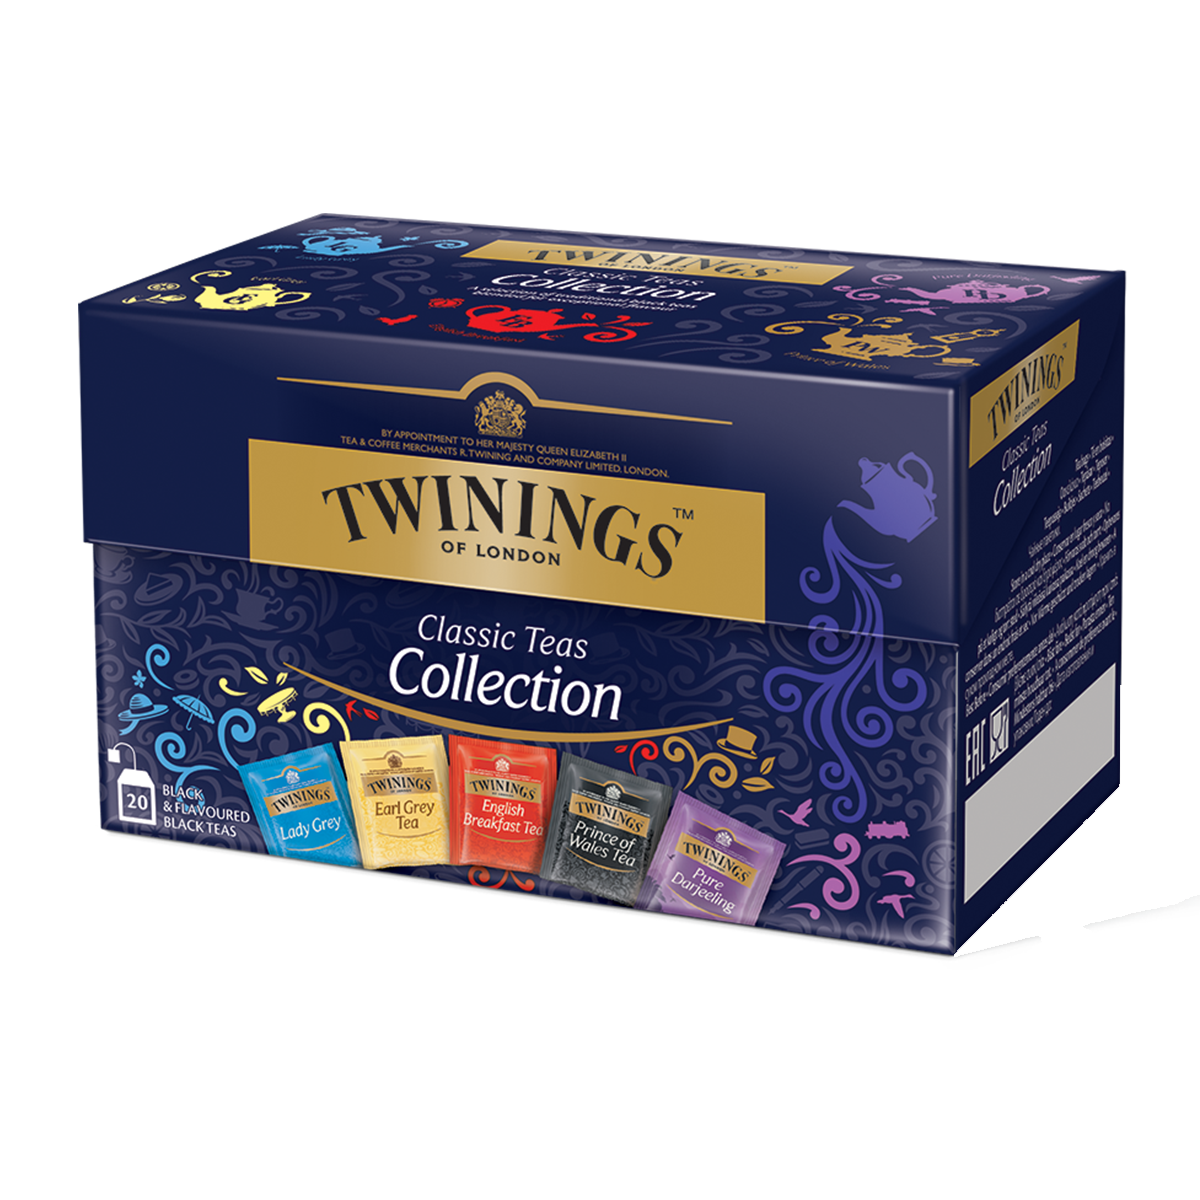  Black Tea Collection - die Schwarztee-Teebox